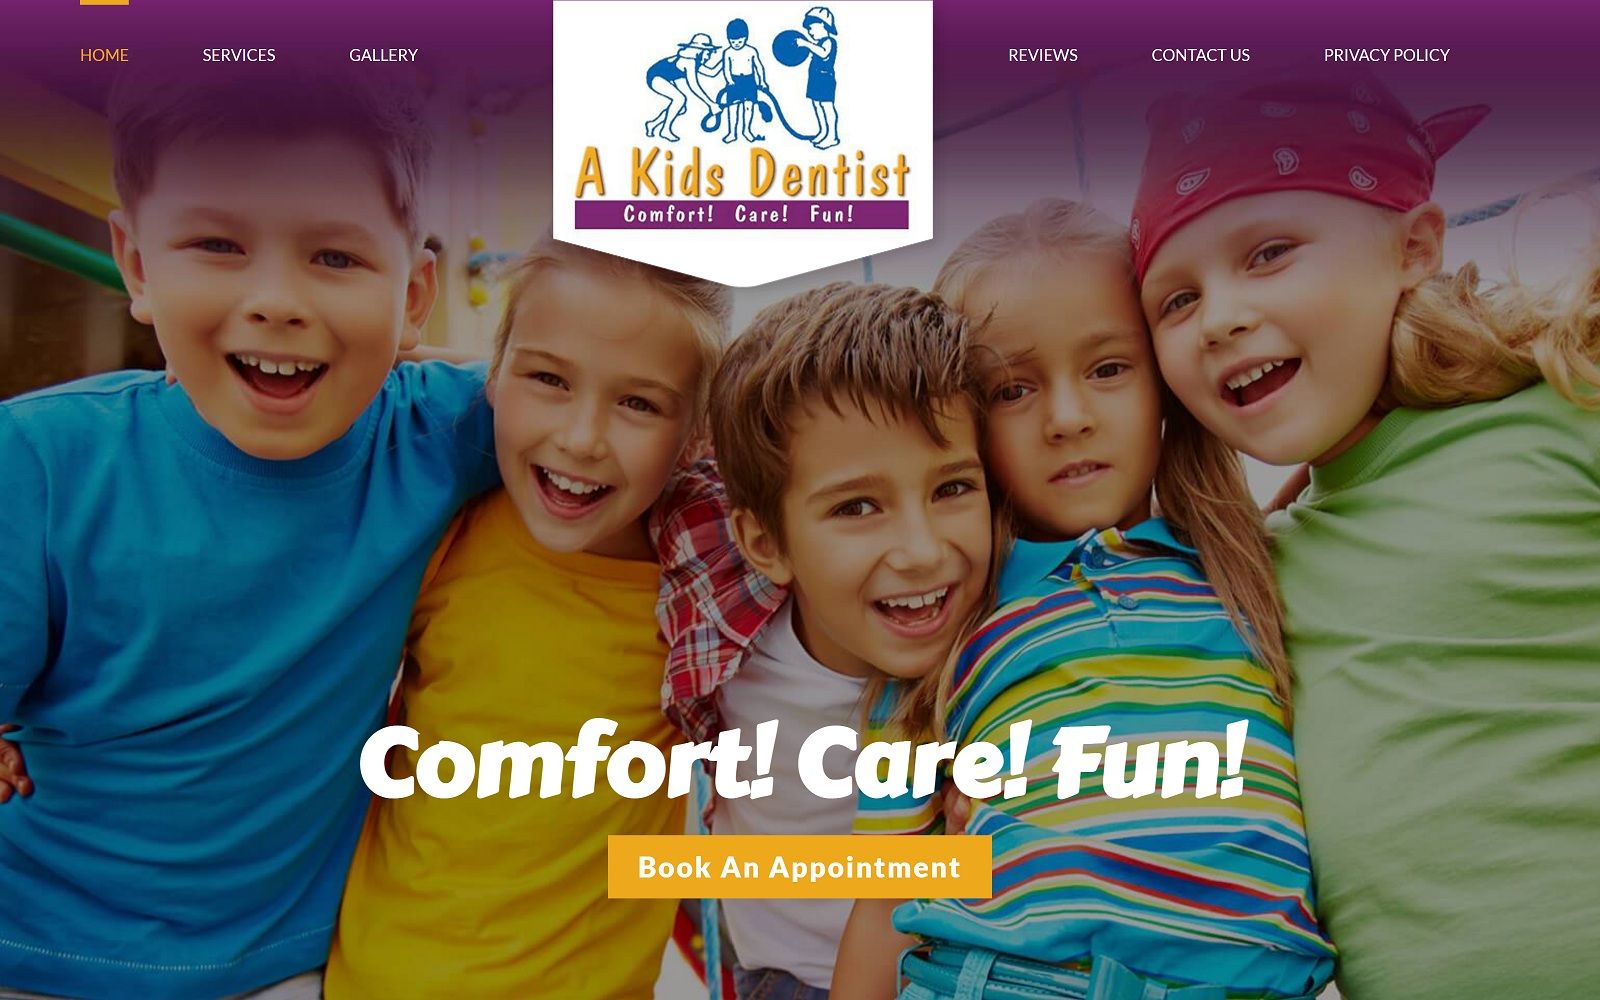 The Screenshot of A Kids Dentist akidsdentist.com website